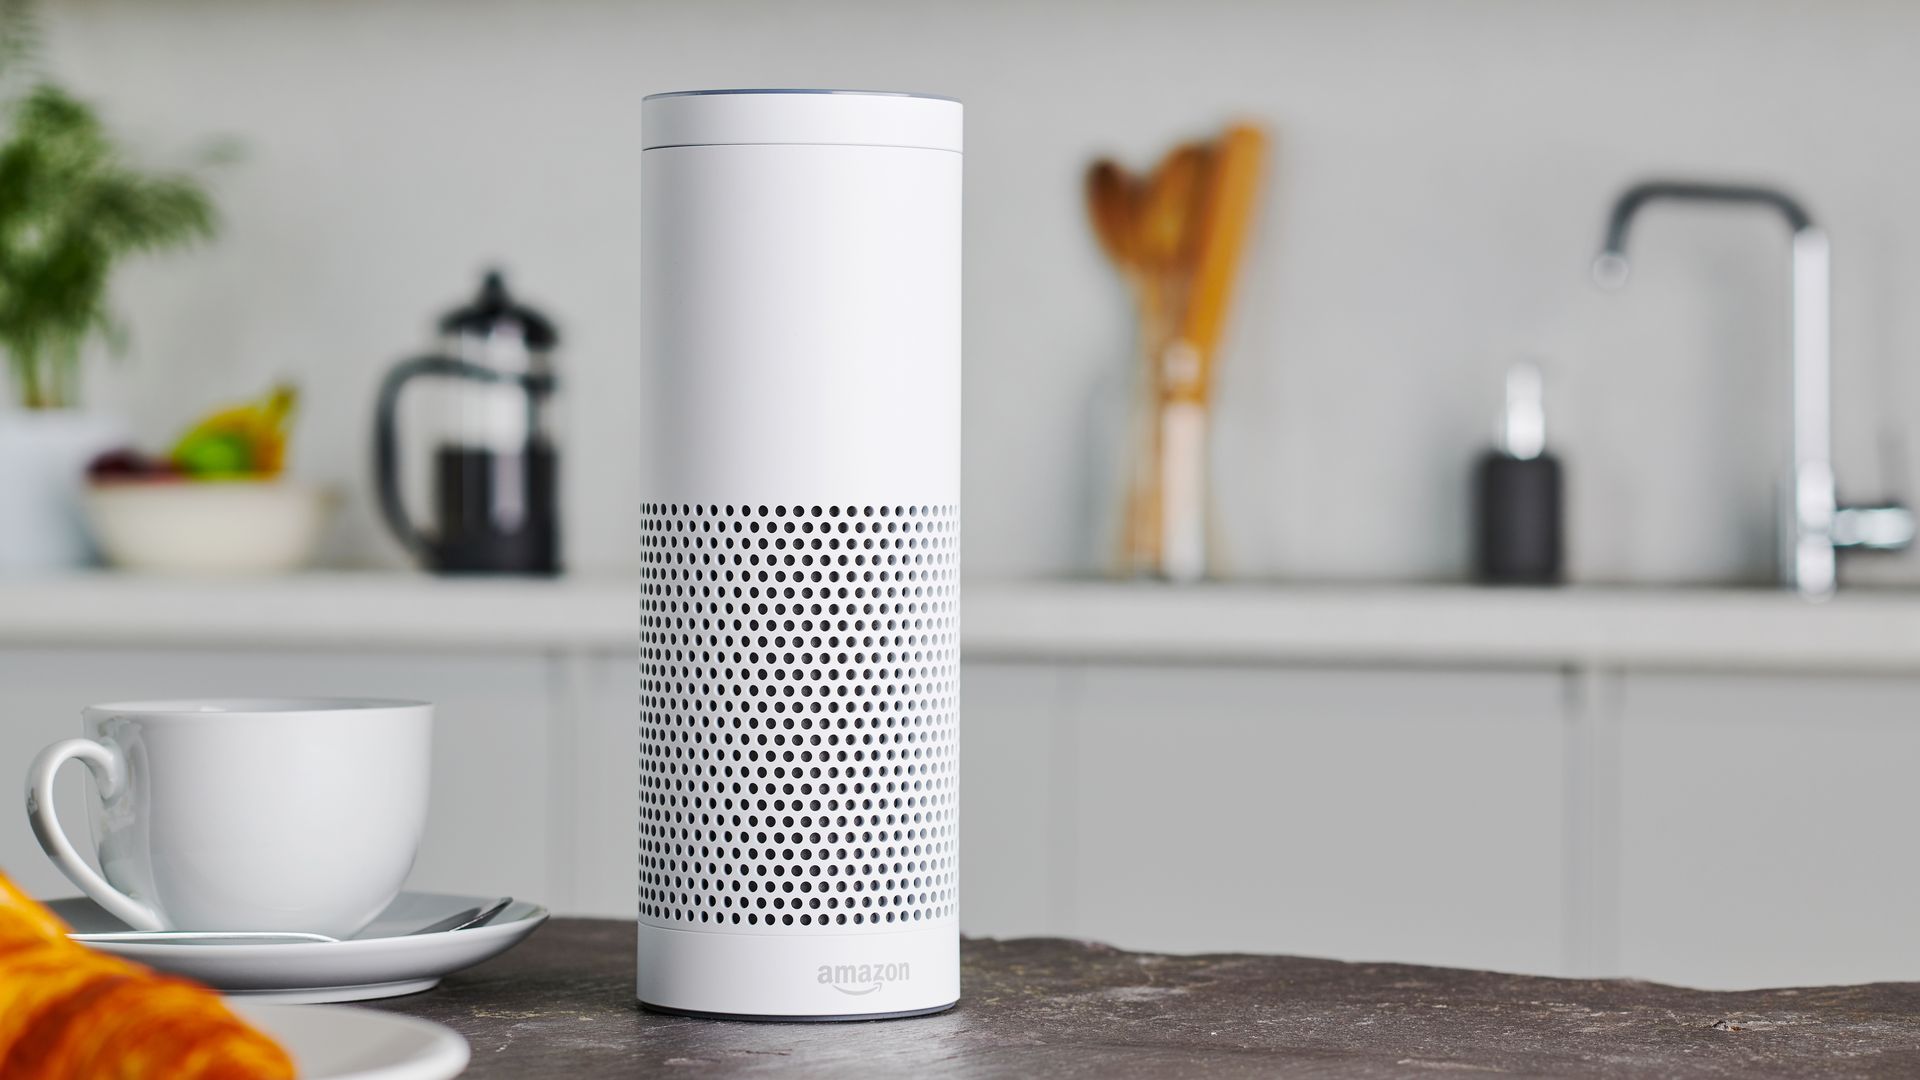 Photo of an Amazon Echo Plus speaker on a kitchen counter